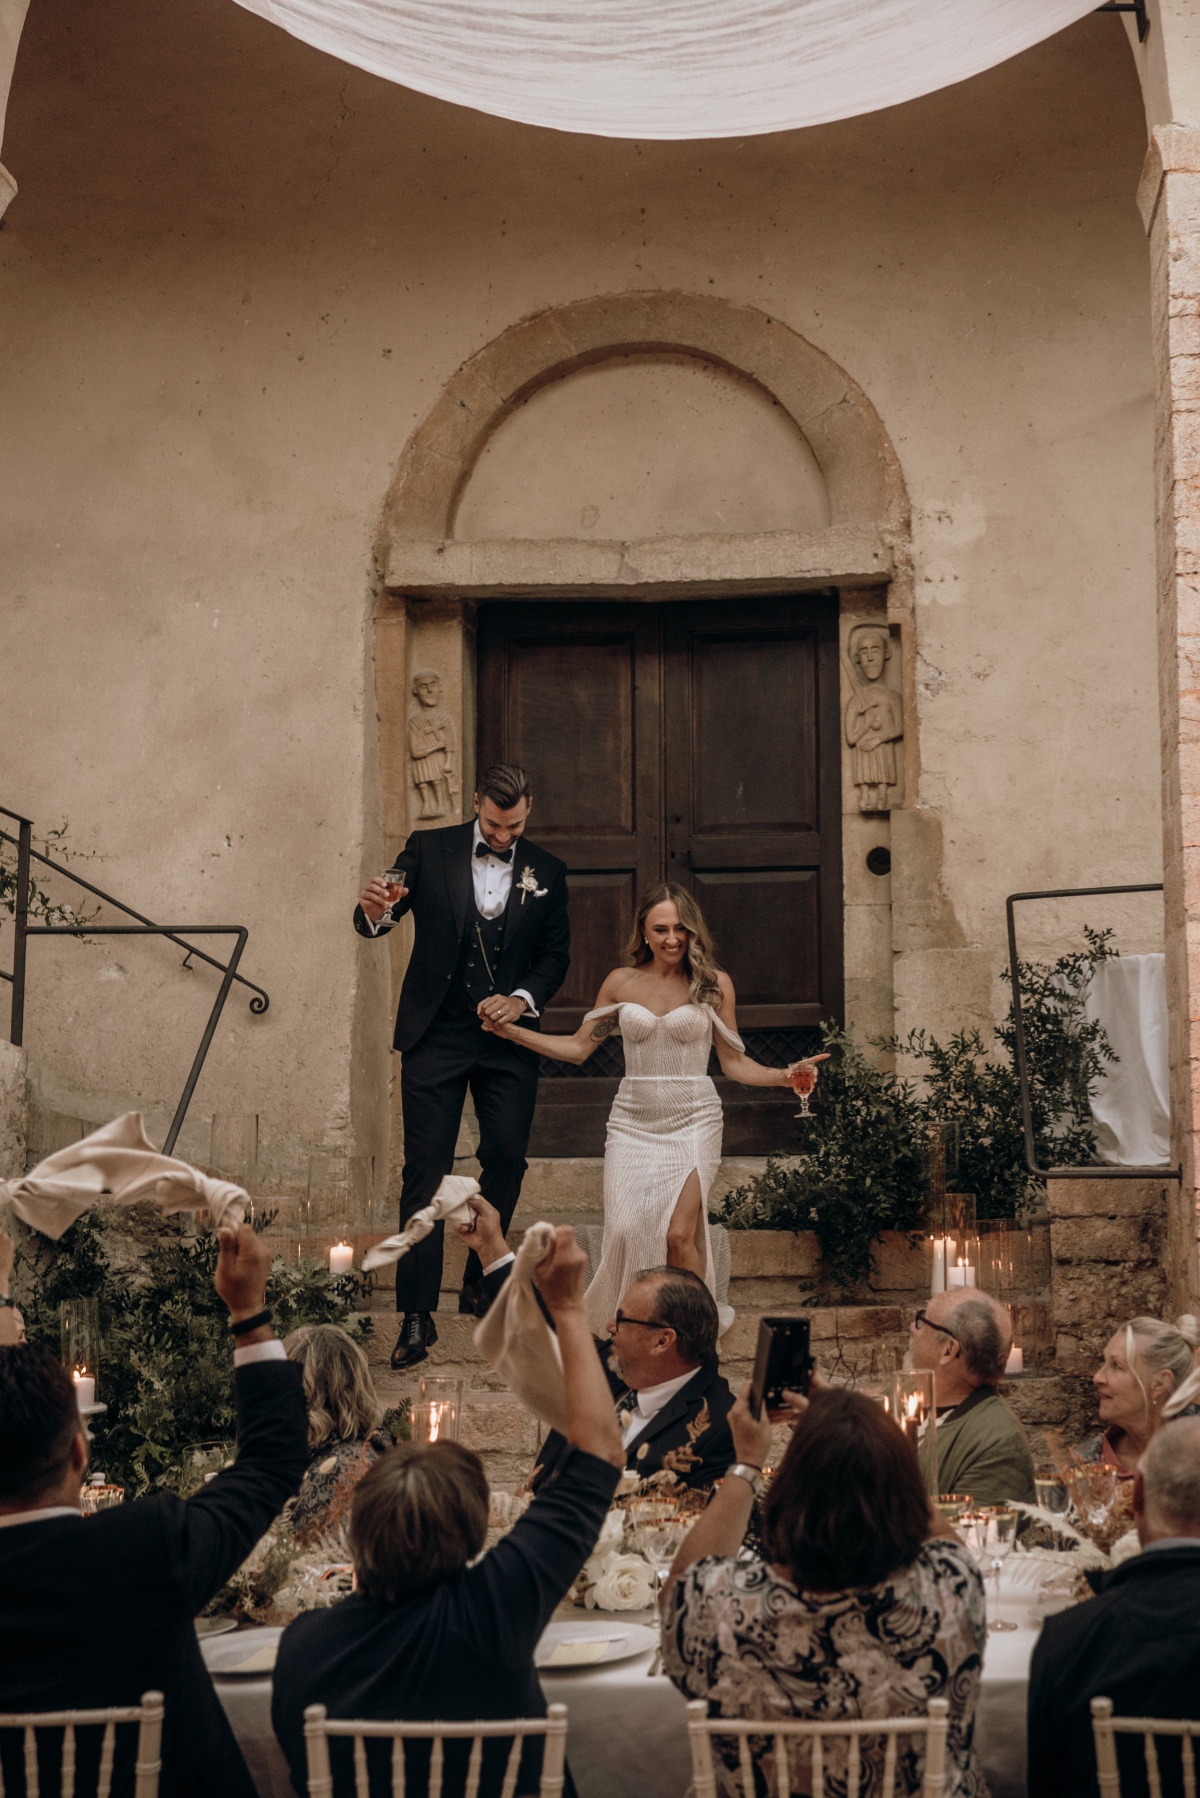 Italian wedding traditions